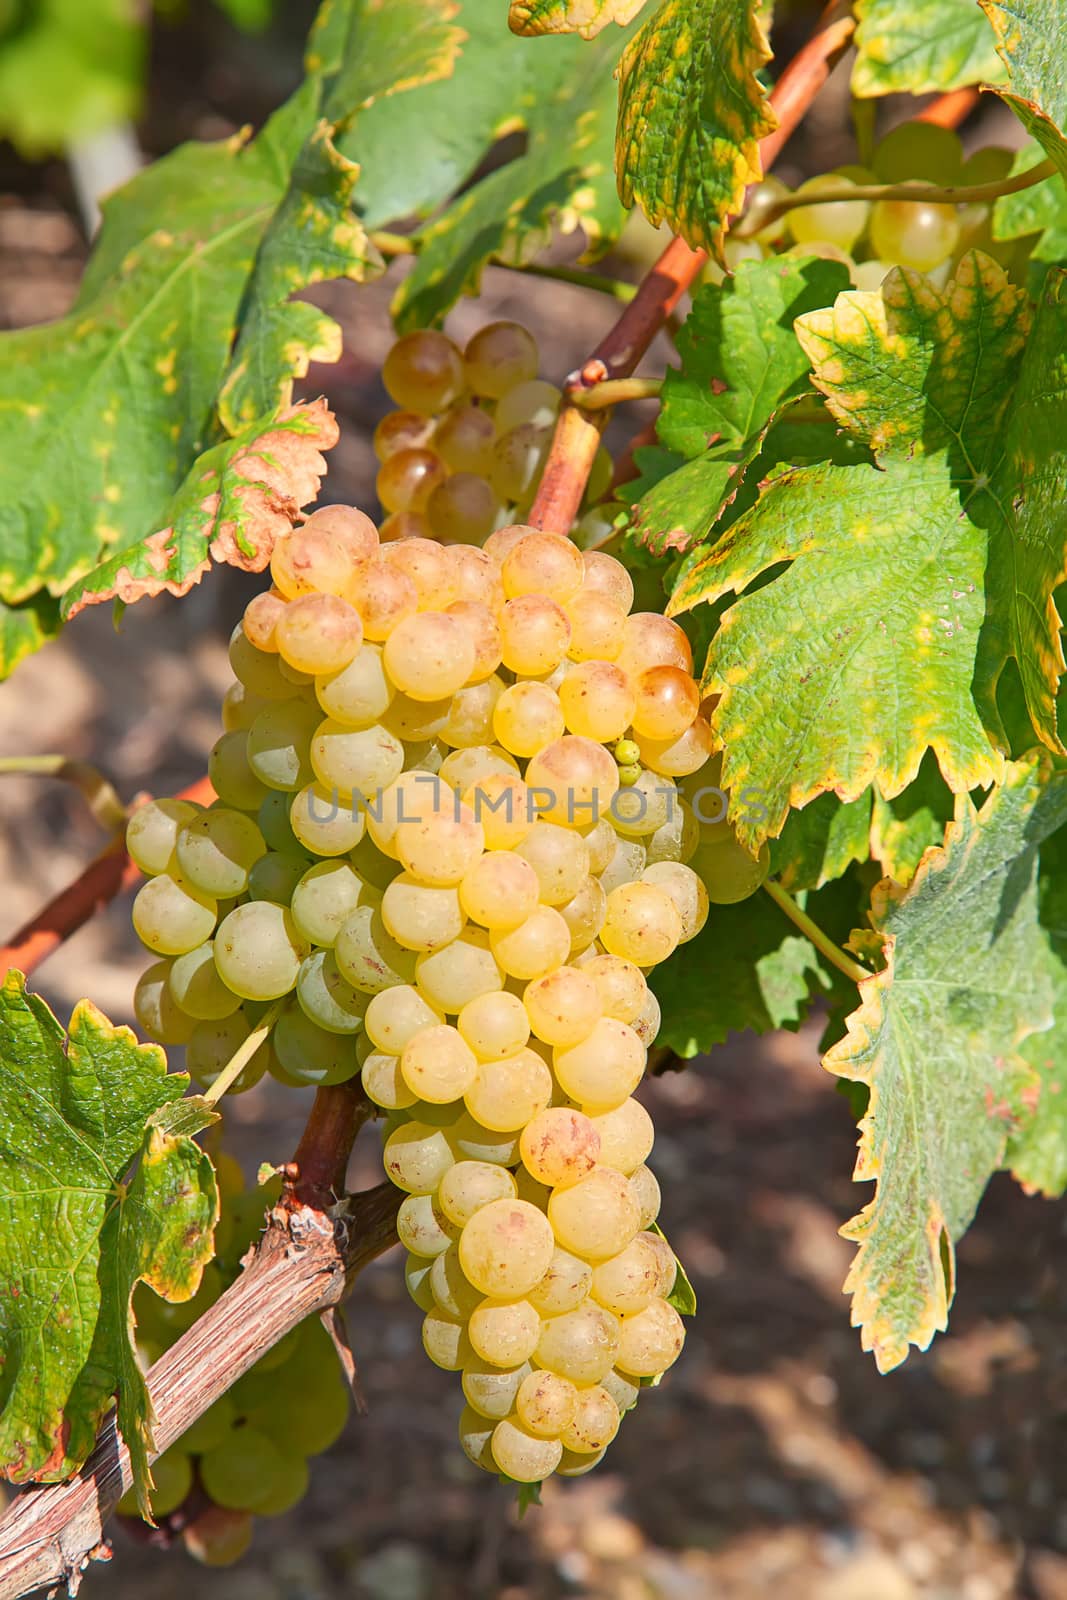 Vineyards of the Lavaux region over lake Leman (lake of Geneva)